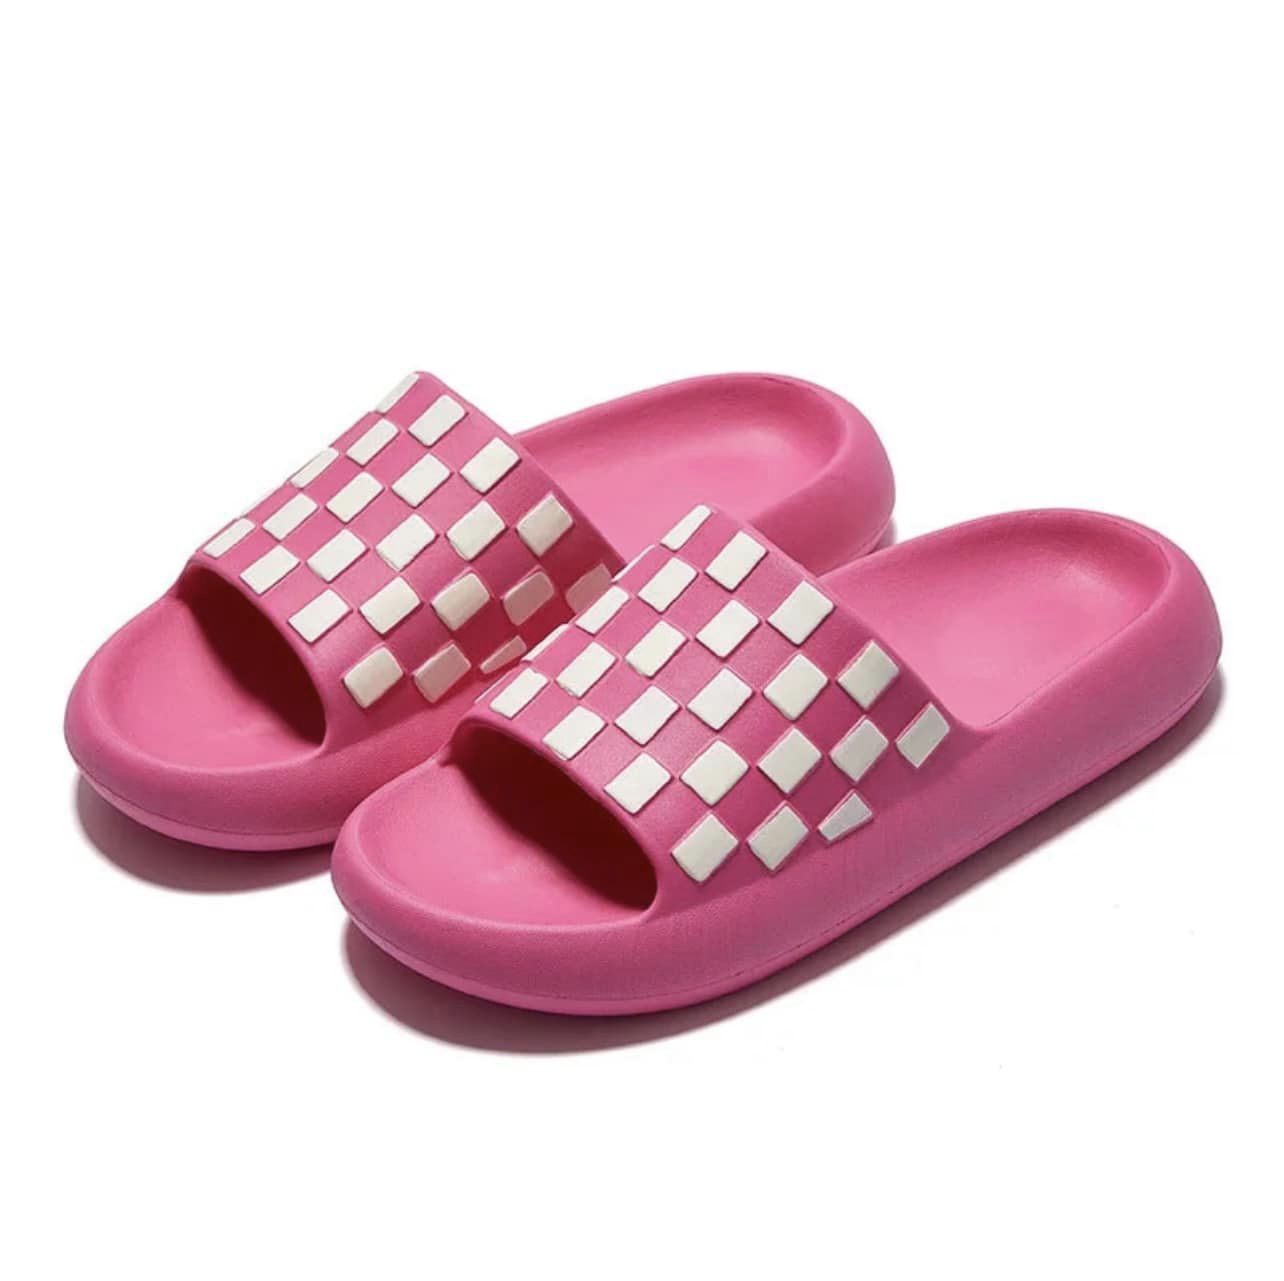 Boujee Slides - Pink Checkered